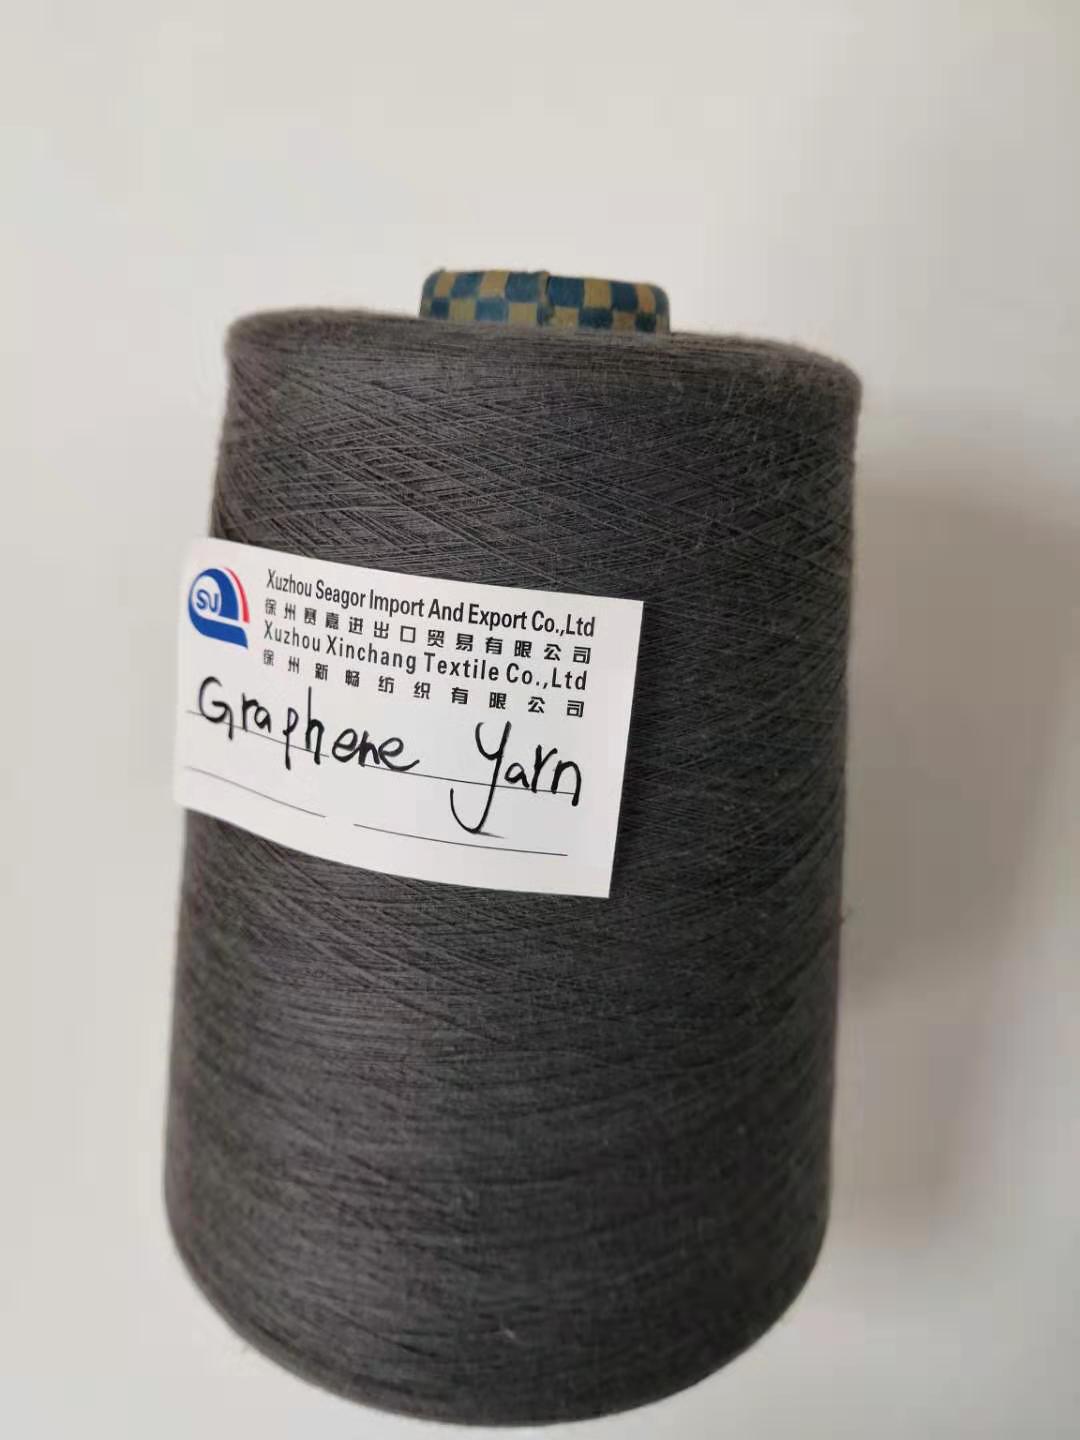 Functional Graphene fiber machine yarn for knitting and weaving